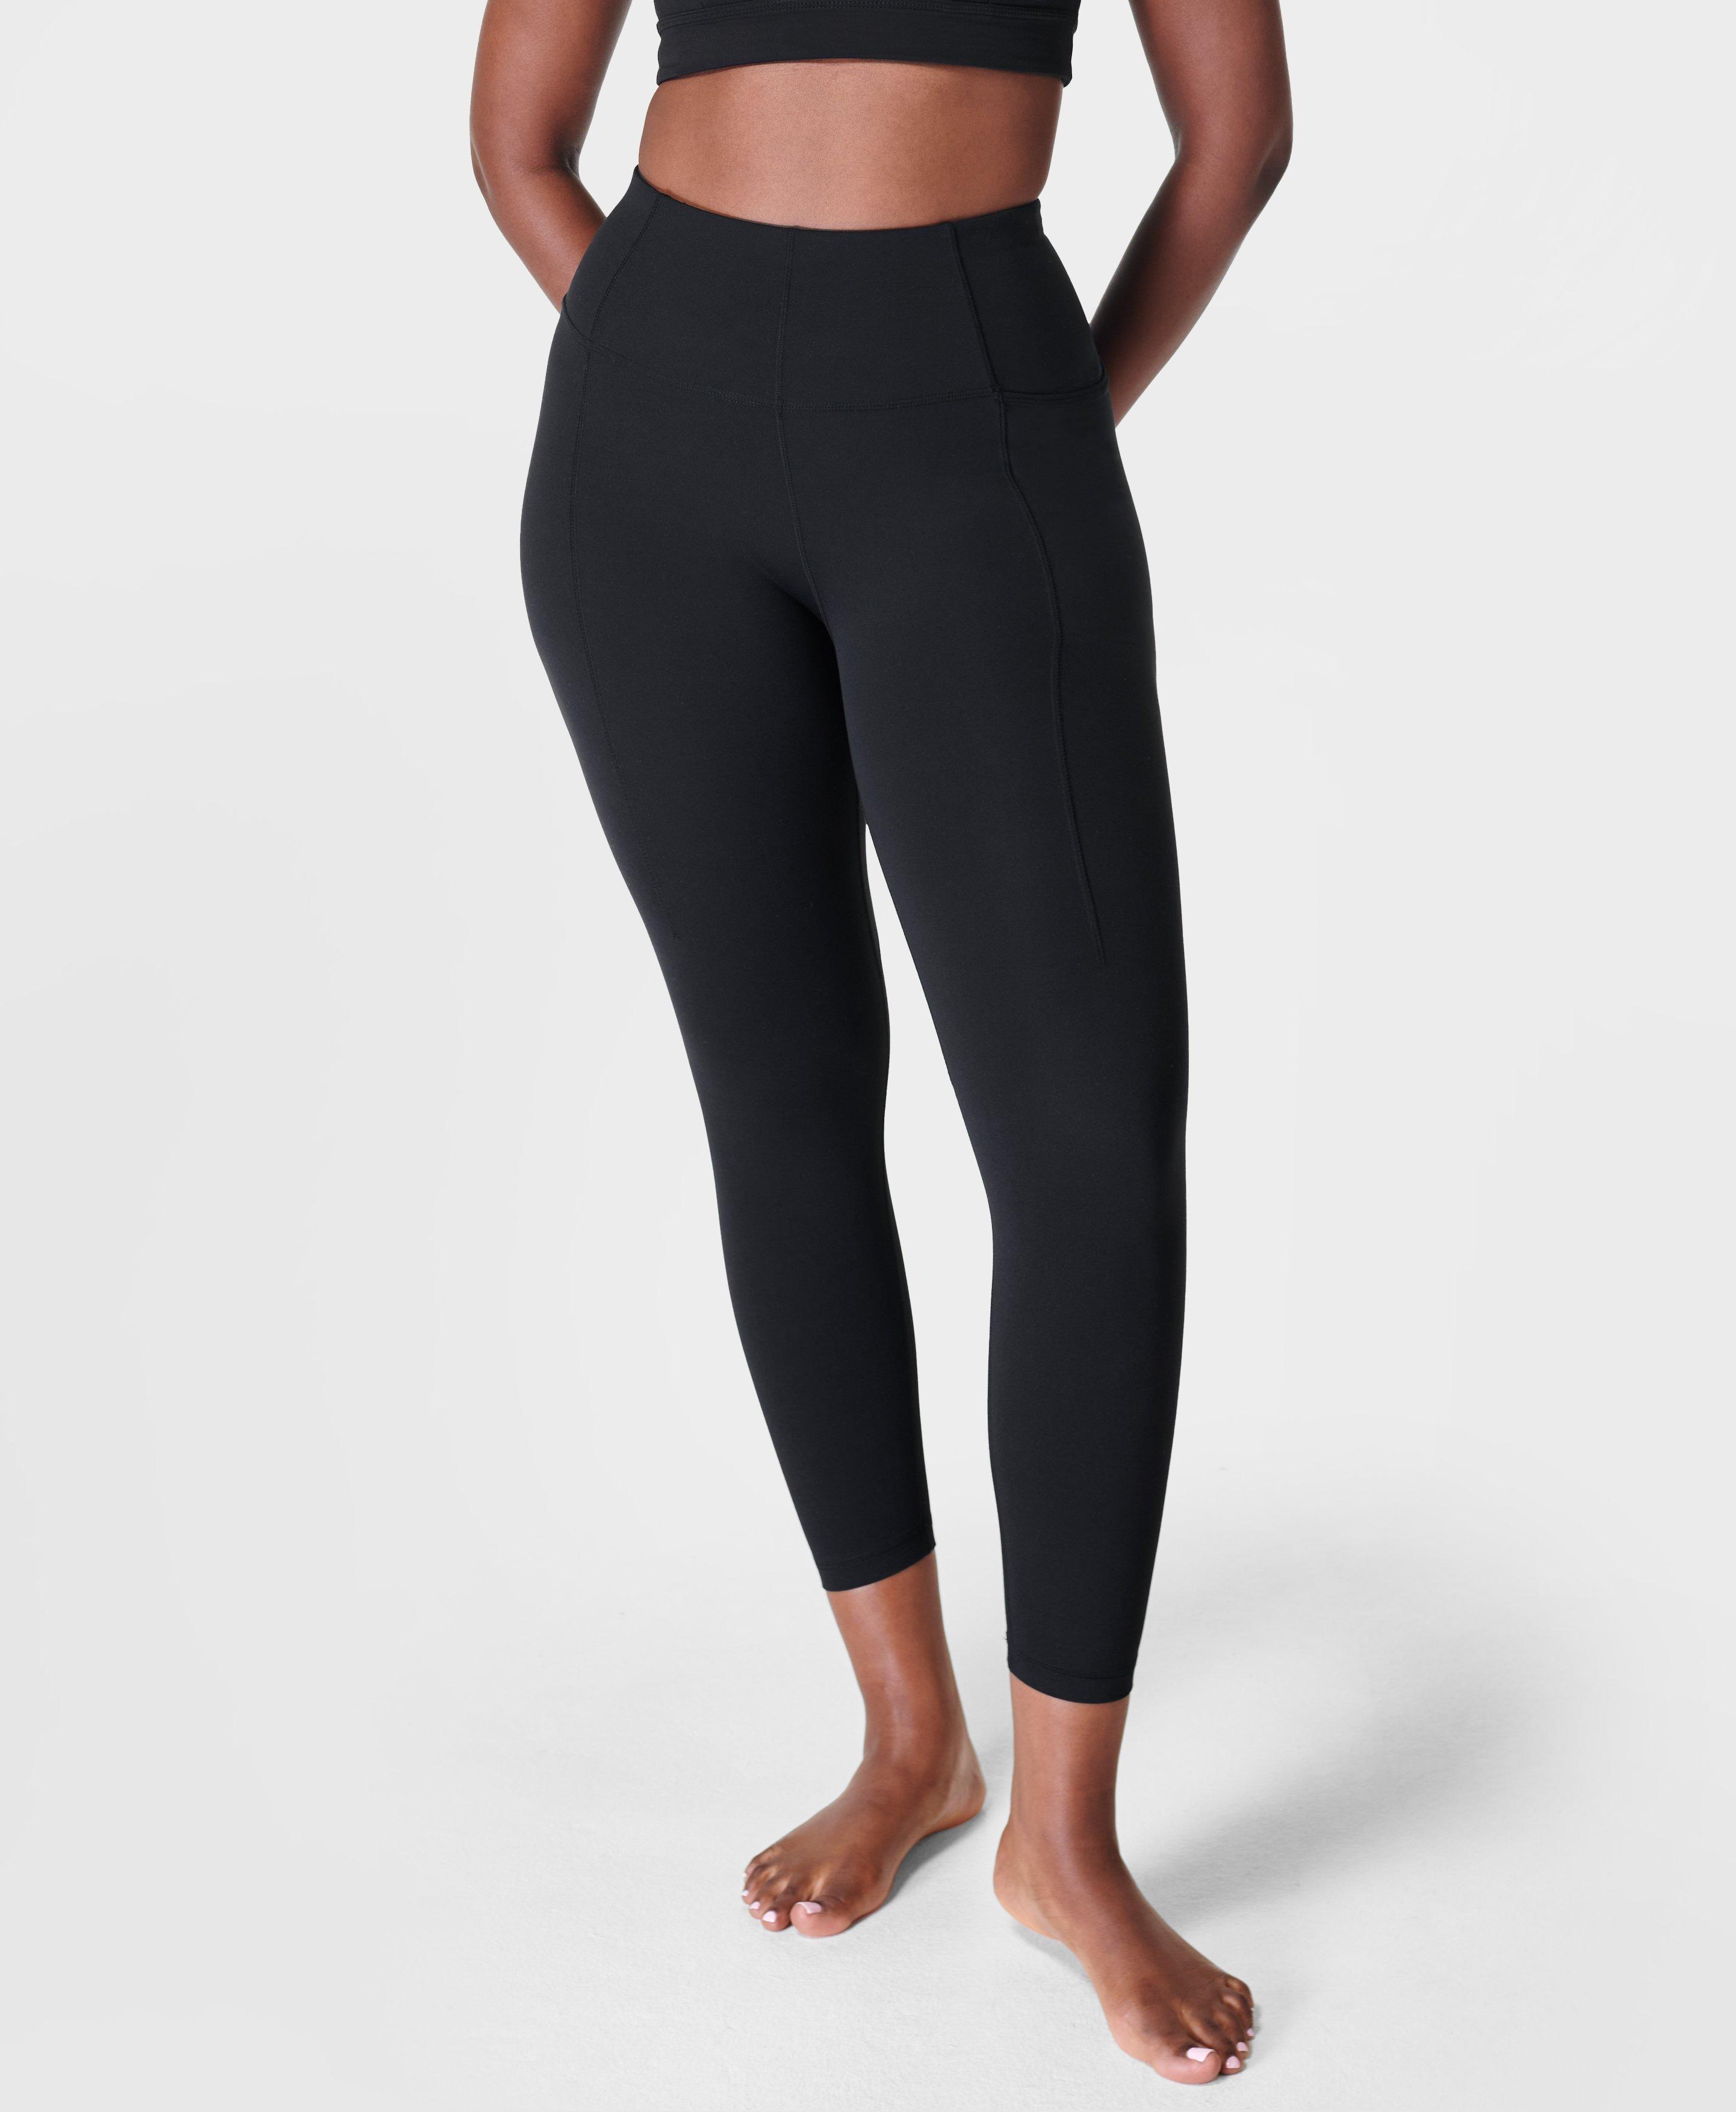 Twenty Montreal Womens Leggings Sweatpants Sweater Black Size S M Lot -  Shop Linda's Stuff